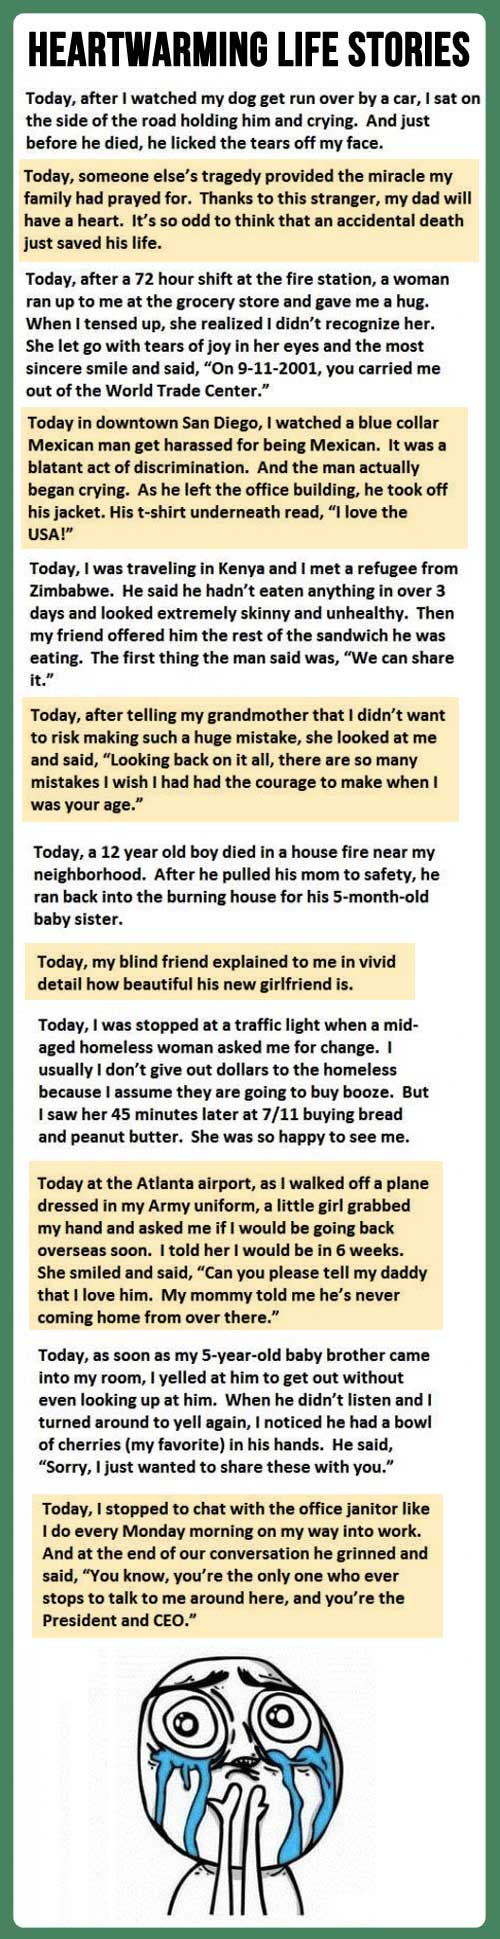 Heartwarming stories.